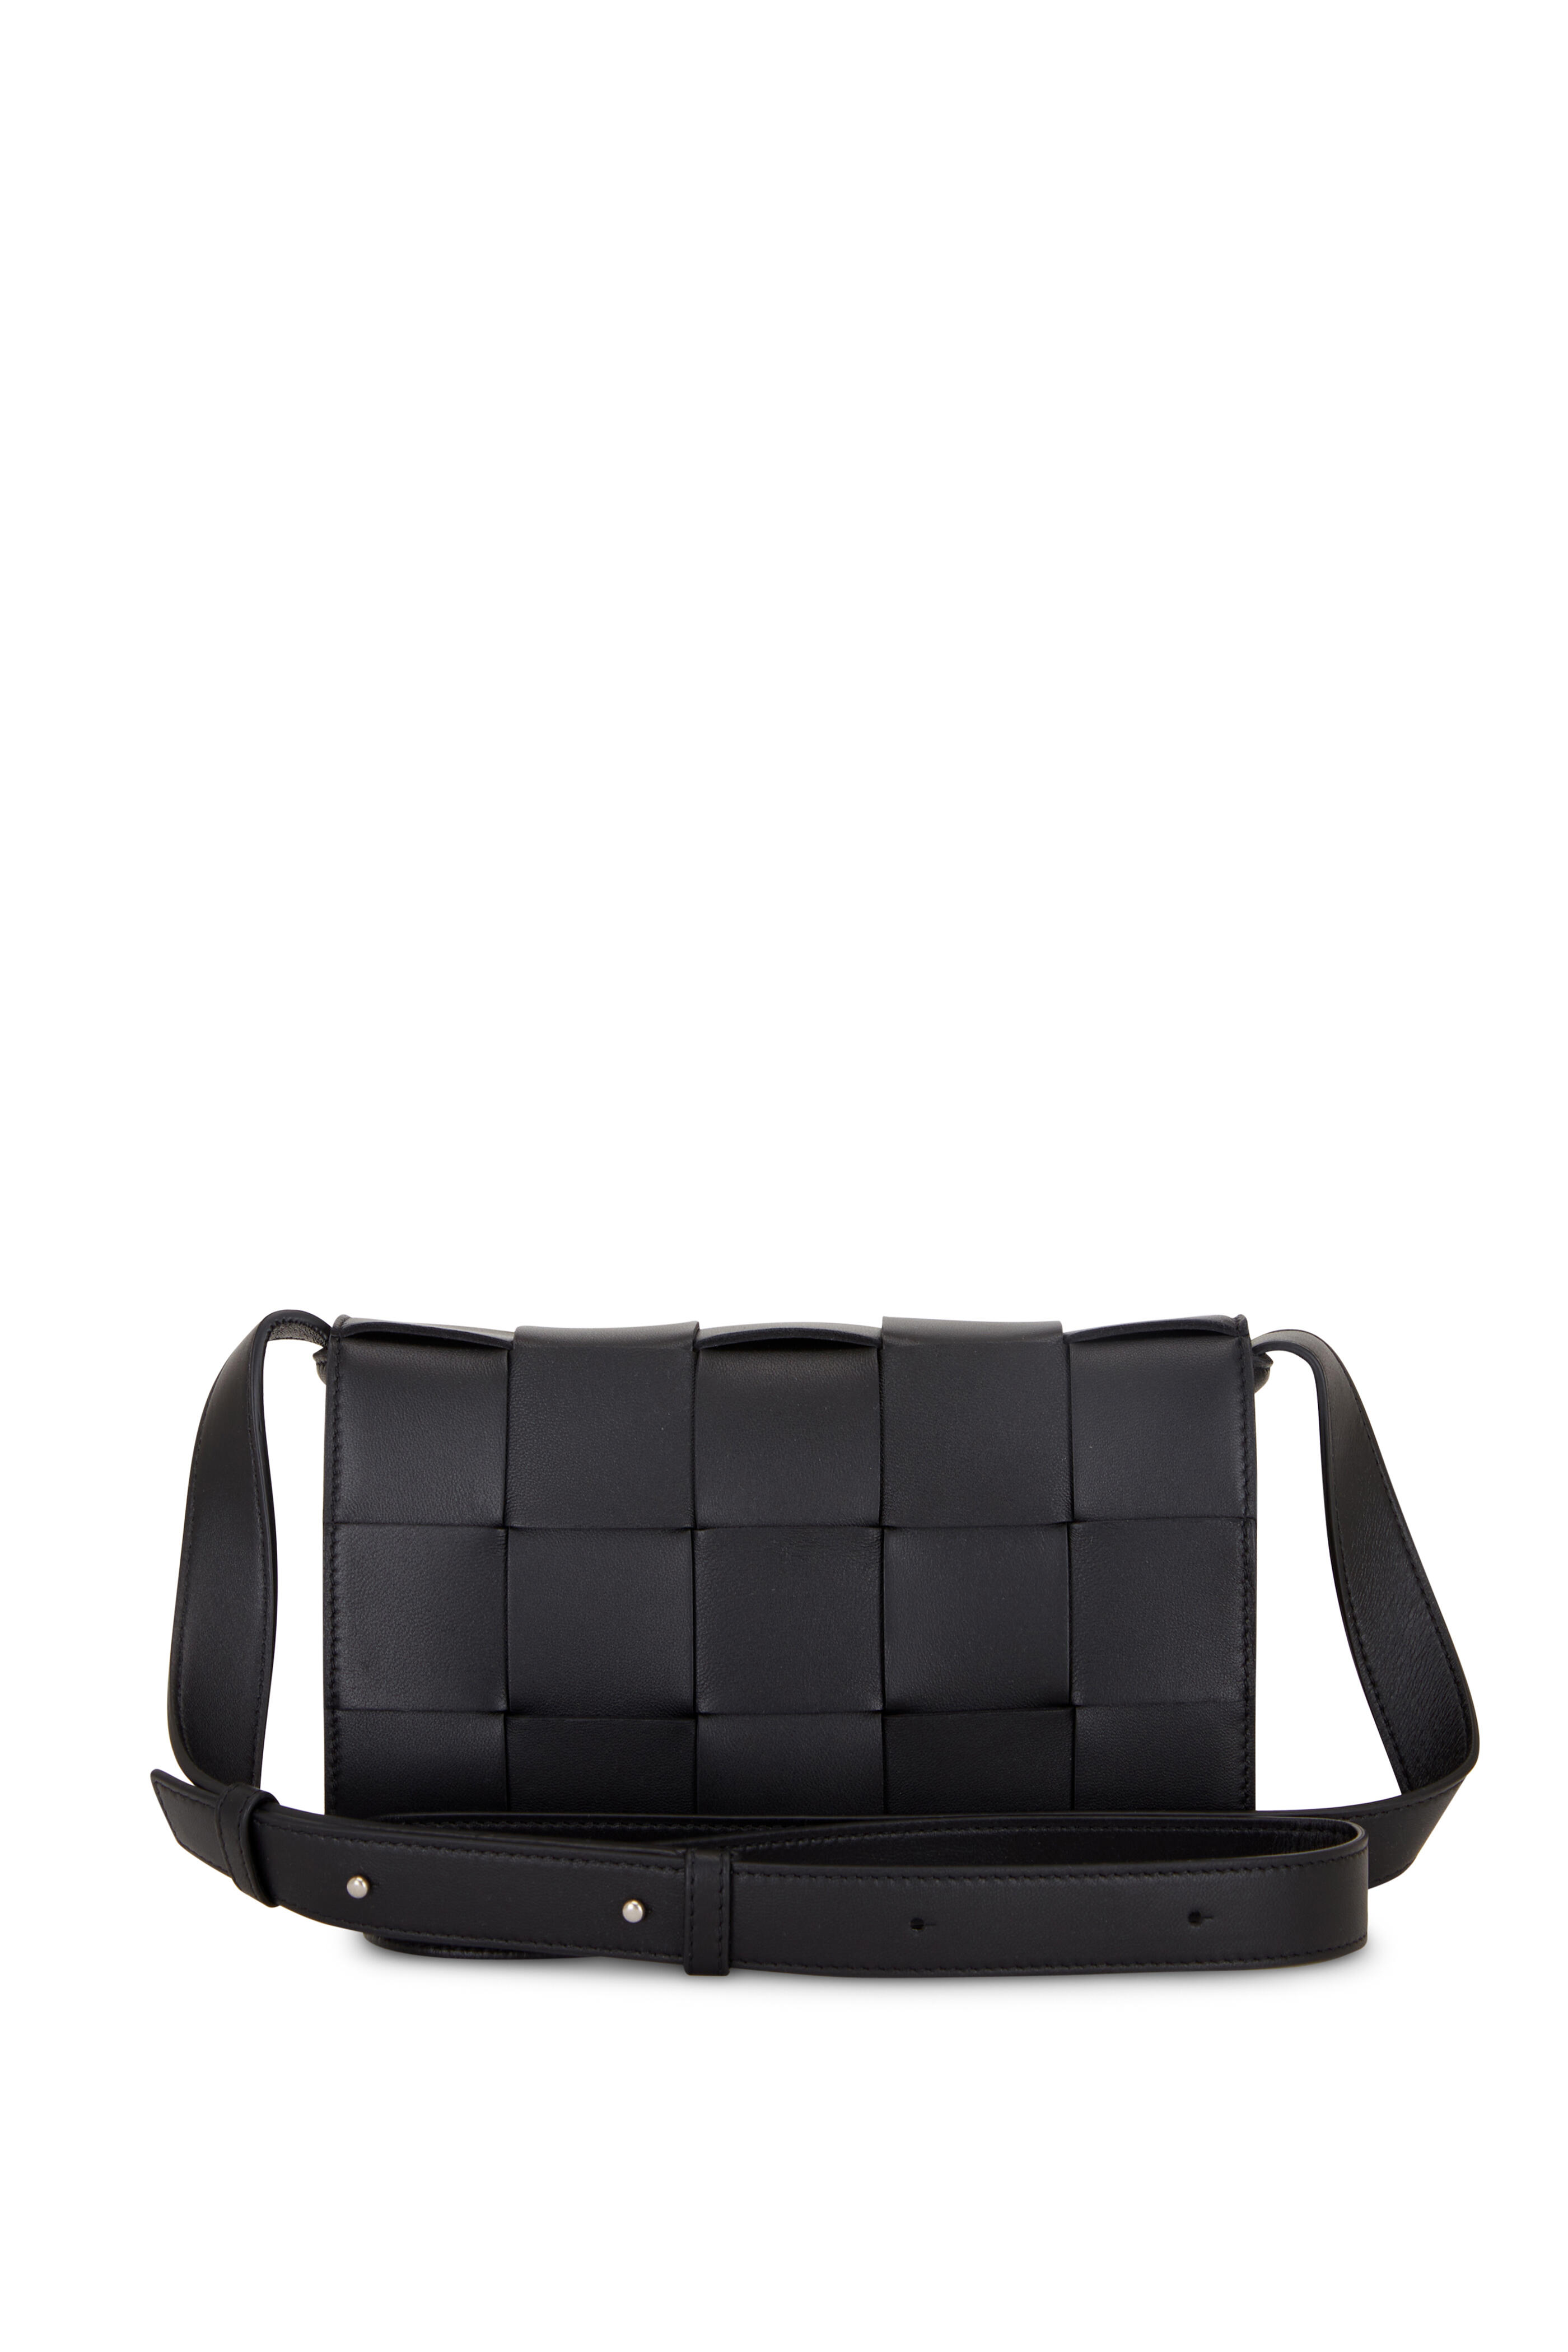 Bottega Veneta Women's Black Woven Leather Mini Camera Bag | by Mitchell Stores